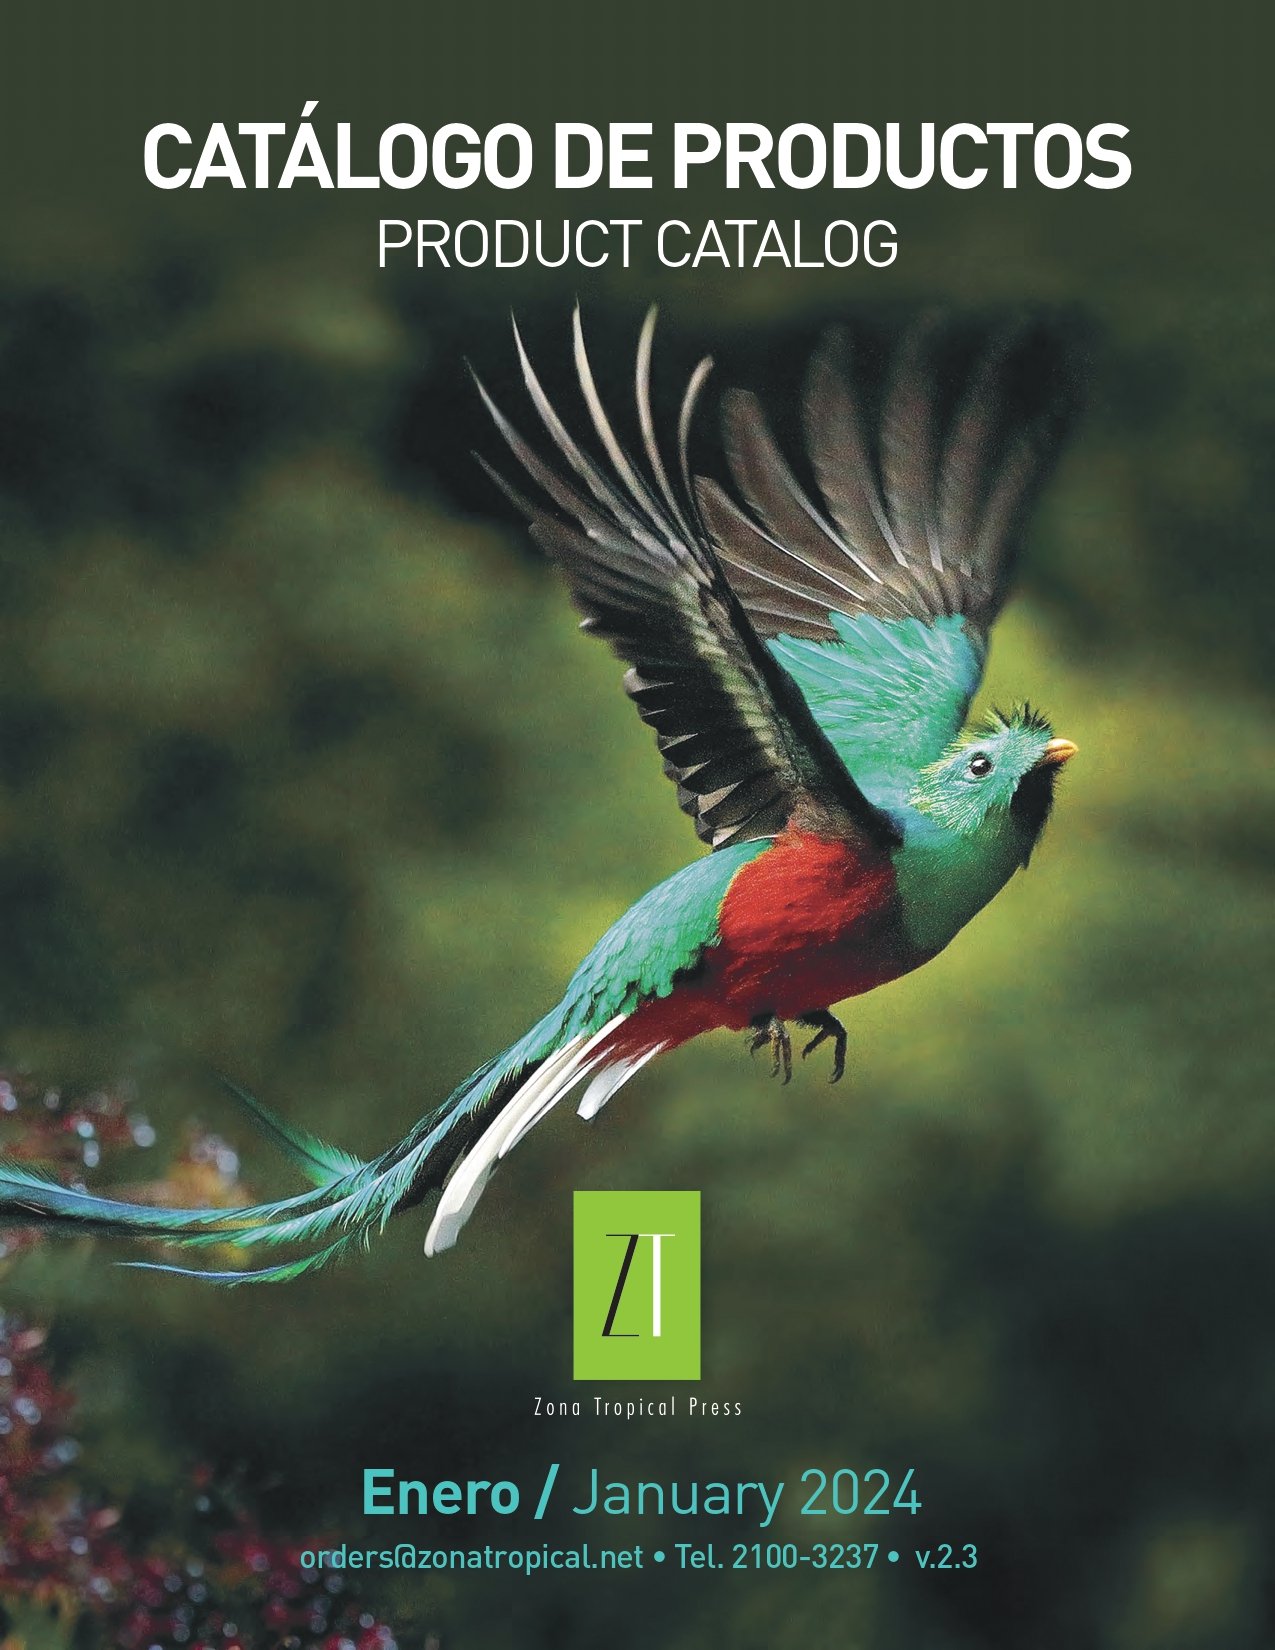 ZT-Catalogo Productos v.2.3_page-0001.jpg